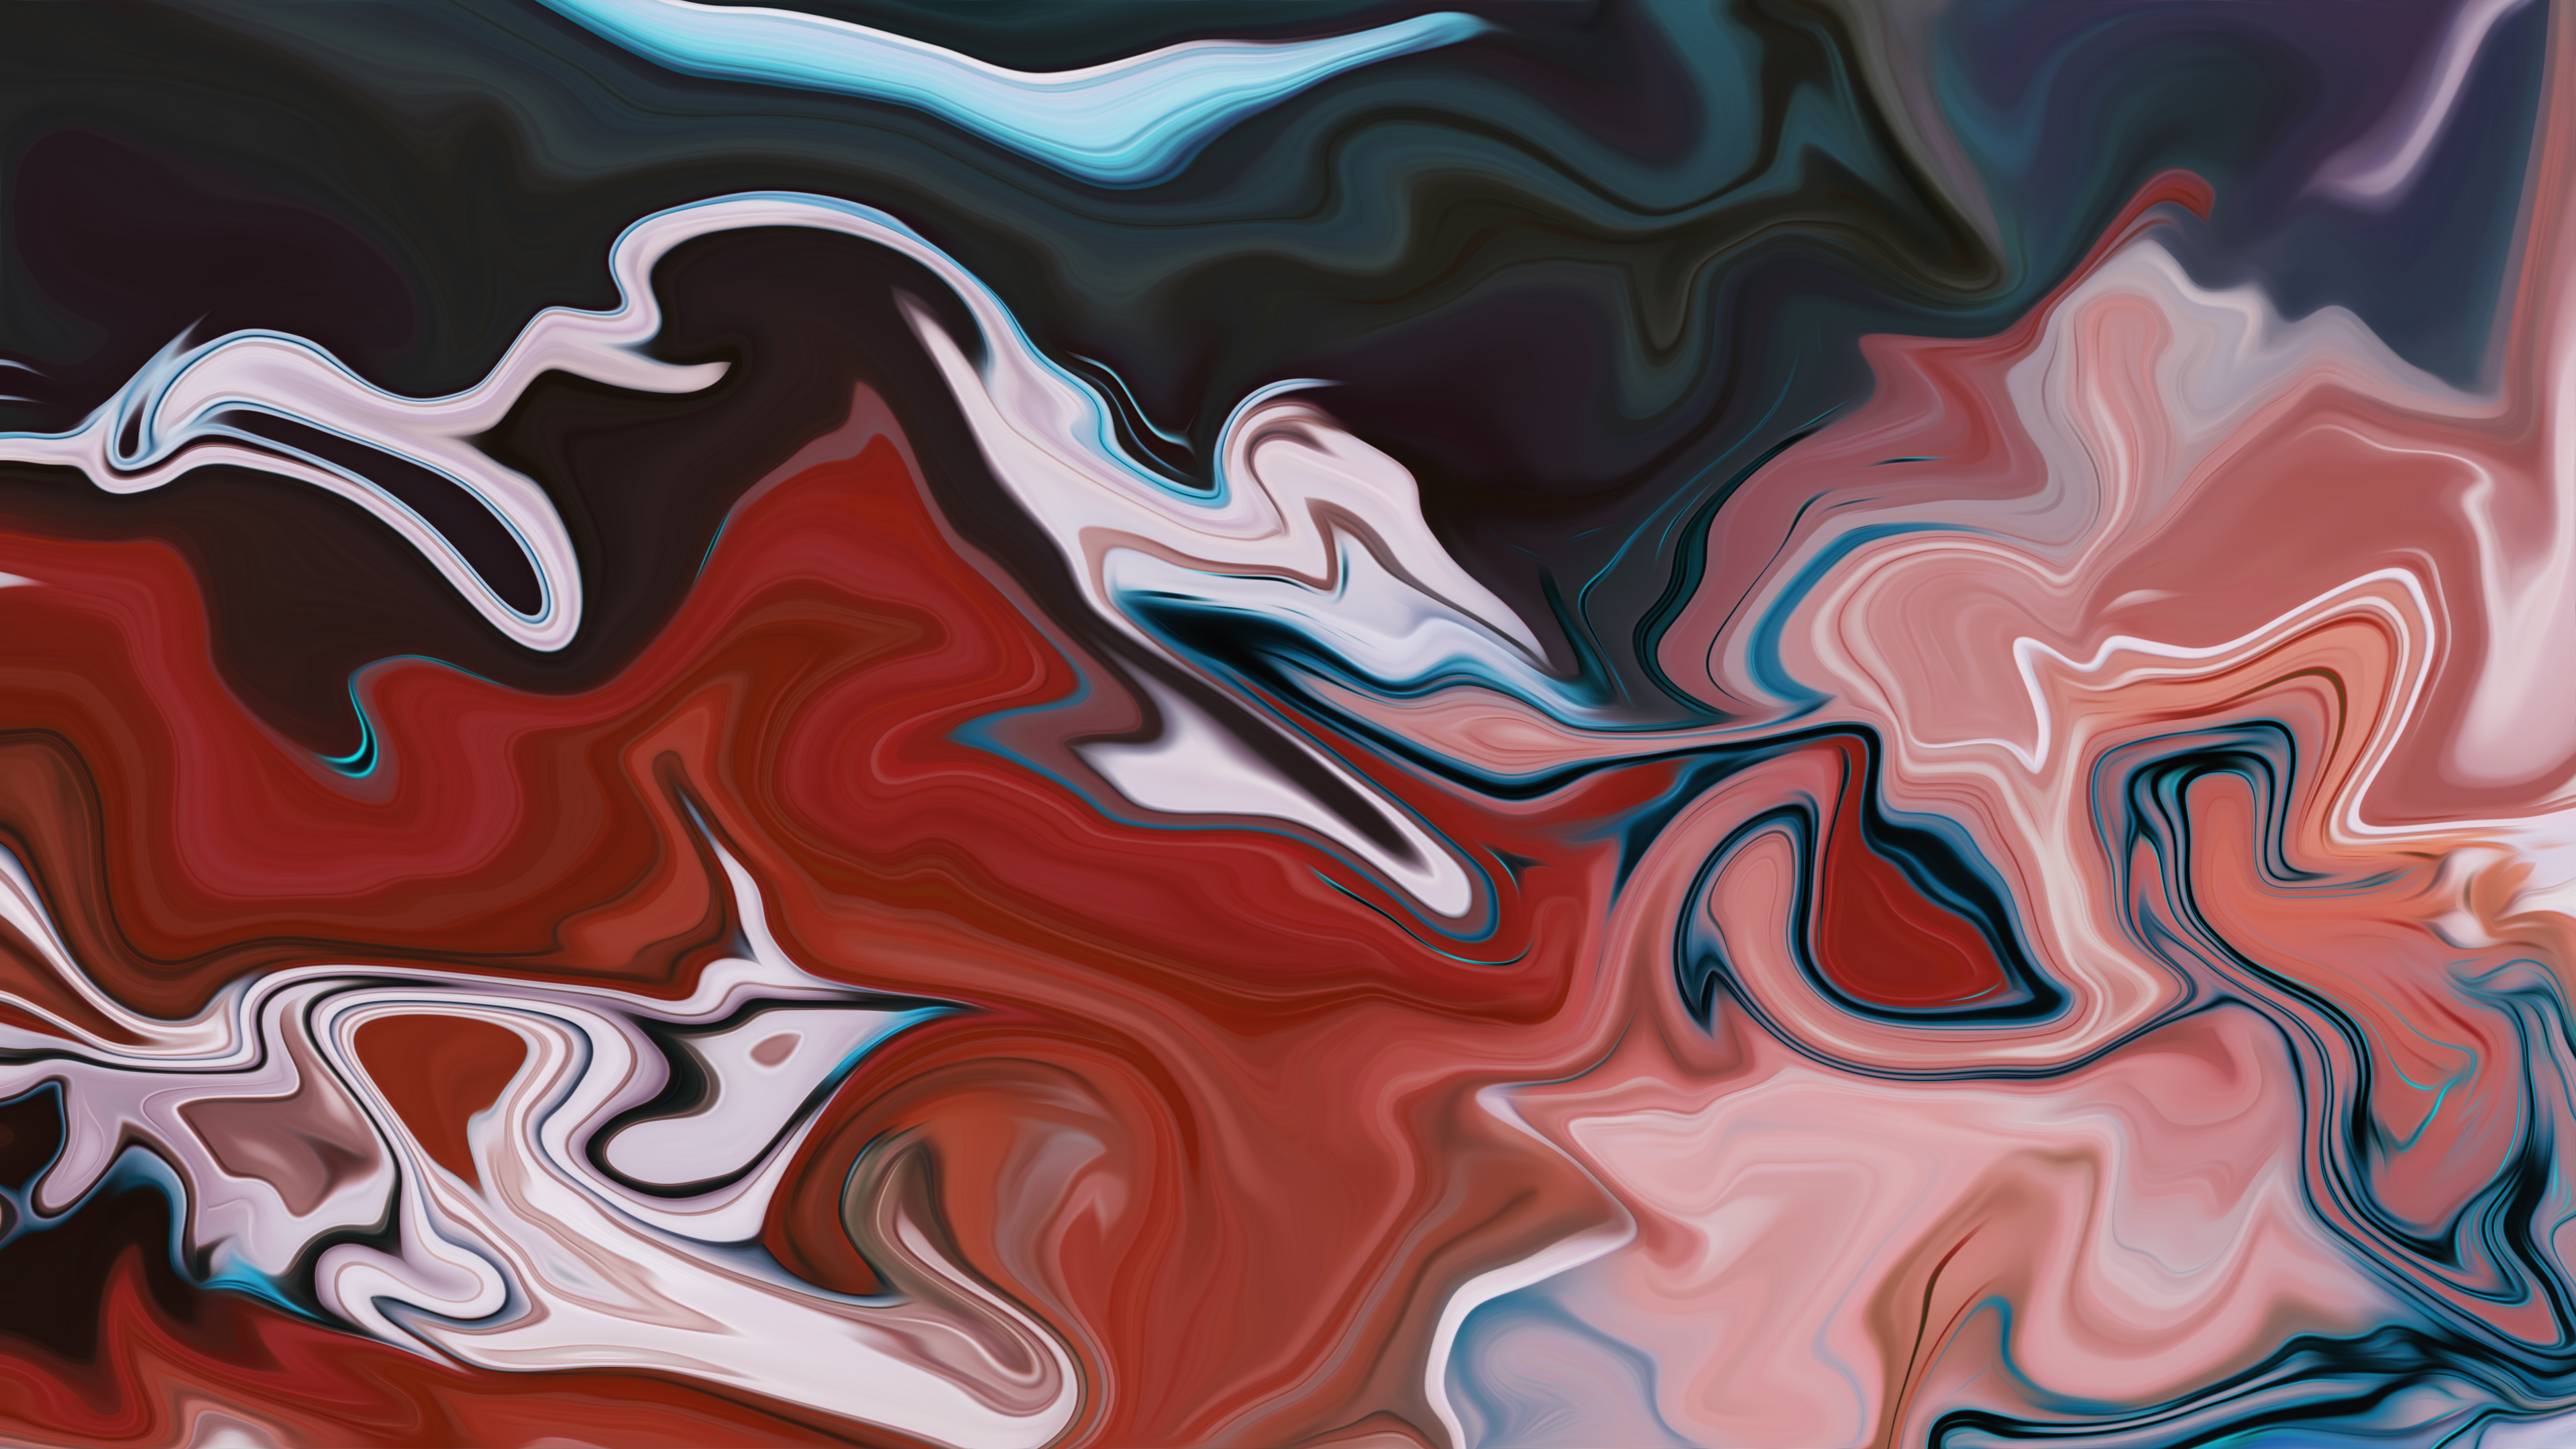 Abstract Fluid Liquid Illustration Graphic Design Artwork Digital Art Shapes Colorful Surreal XEBELi 3840x2160